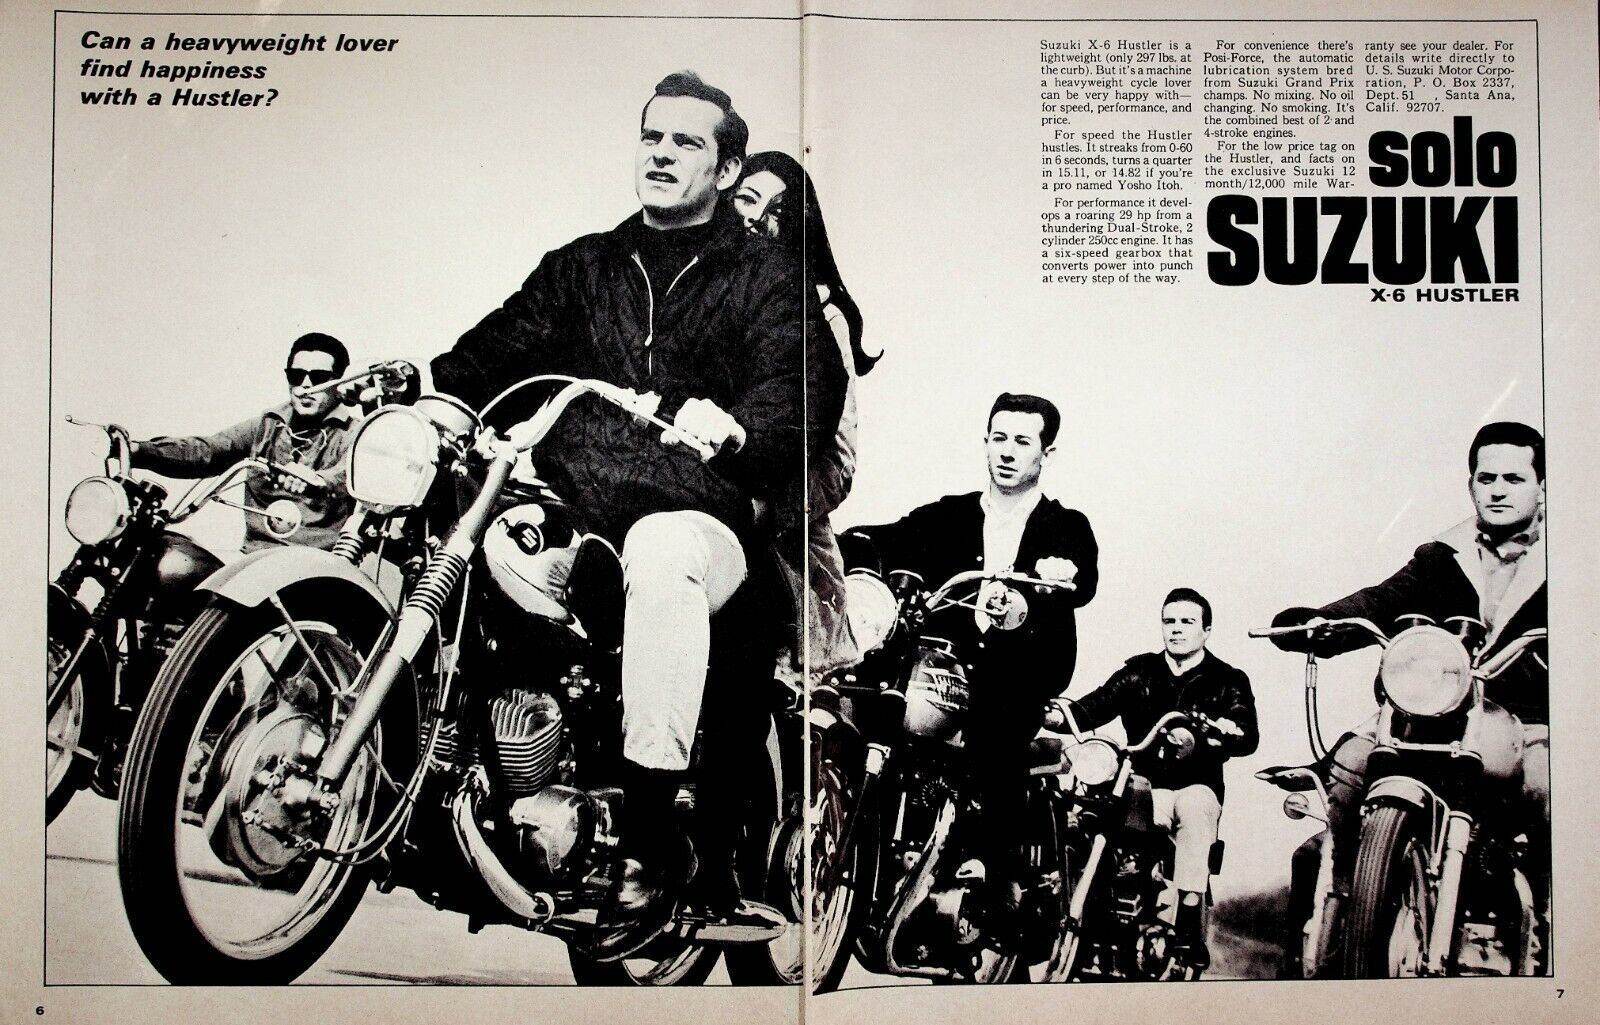 1966 Suzuki 250 X-6 Hustler - 2-Page Vintage Motorcycle Ad